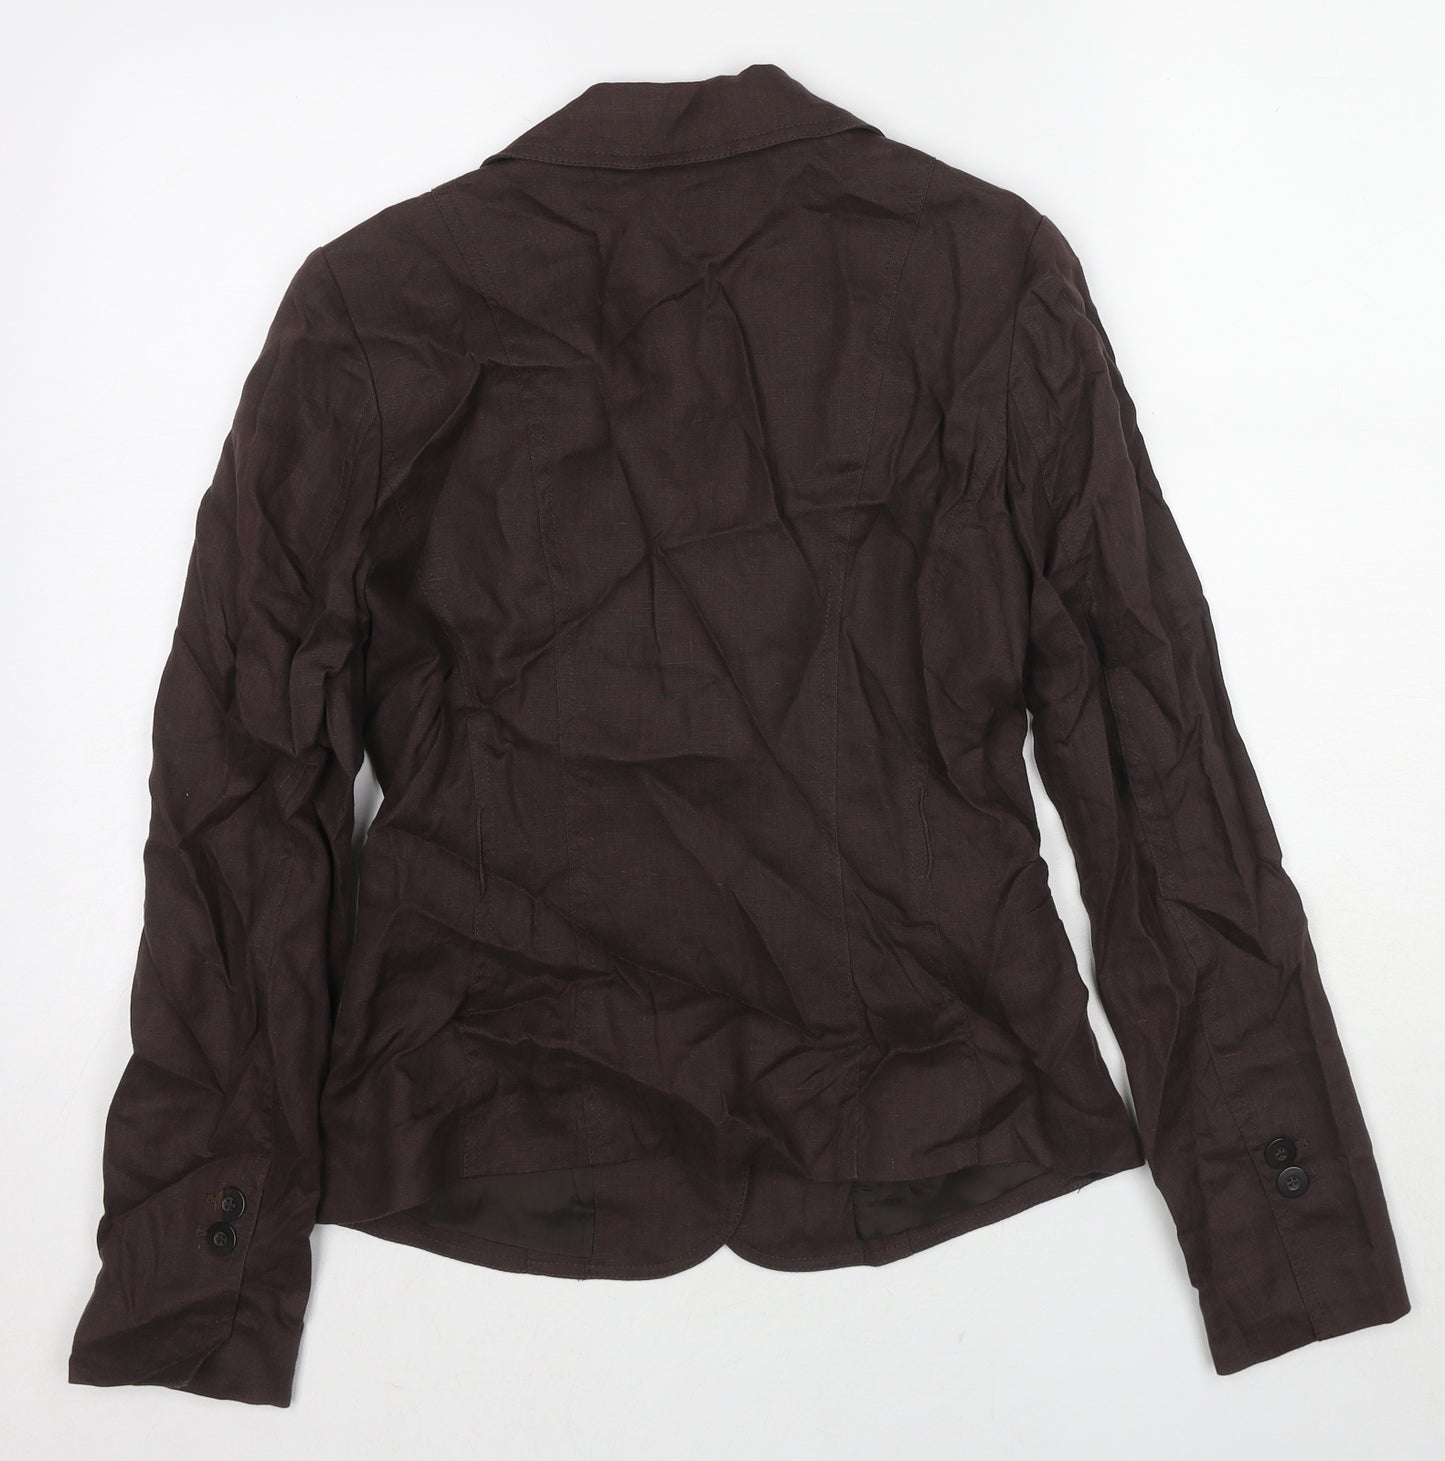 Mexx Womens Brown Jacket Blazer Size 12 Button